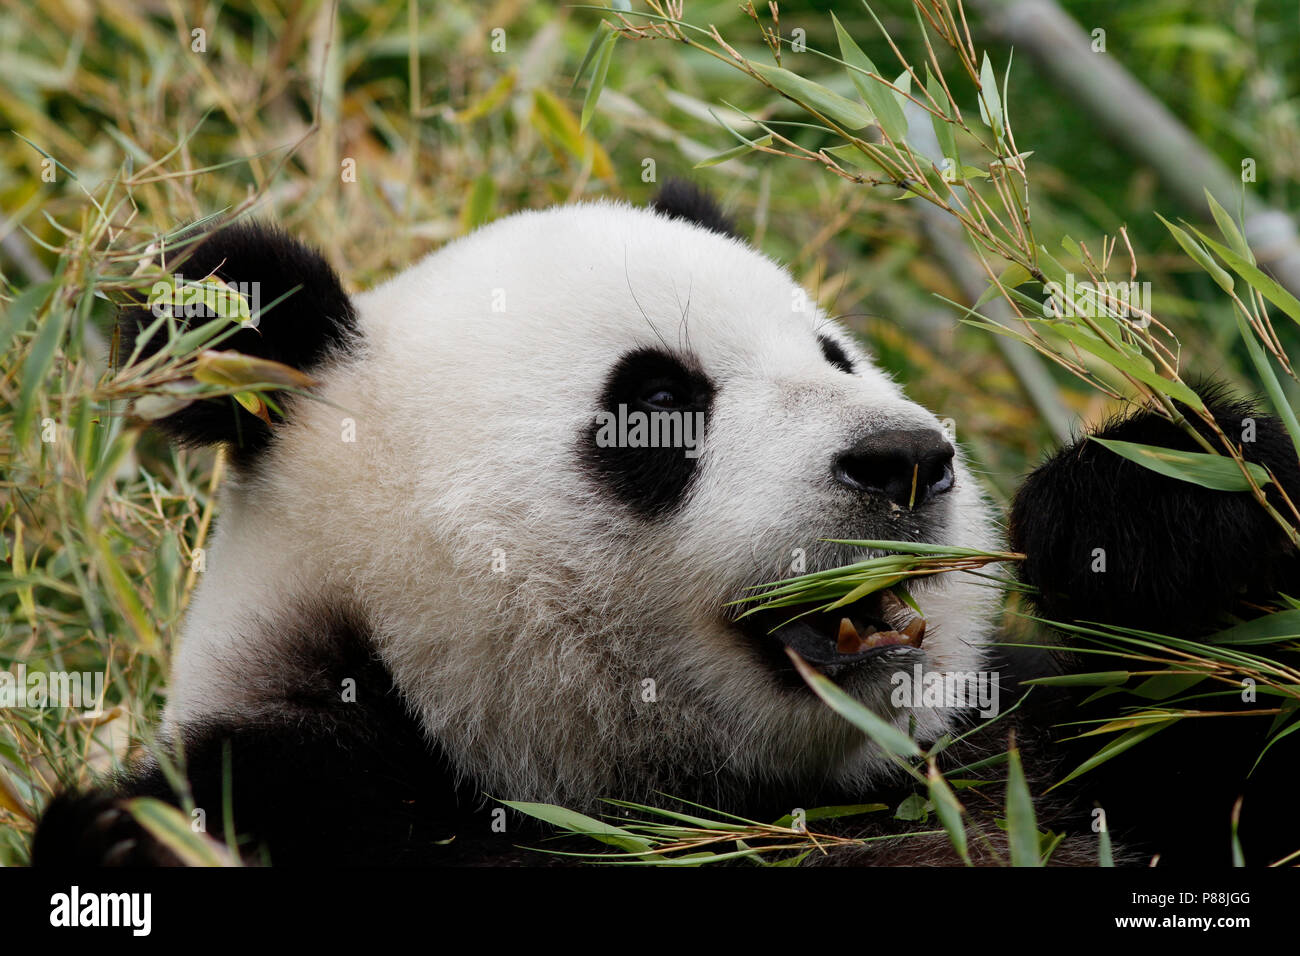 reuzenpanda eet bamboe; bamboo eating Giant Panda Stock Photo